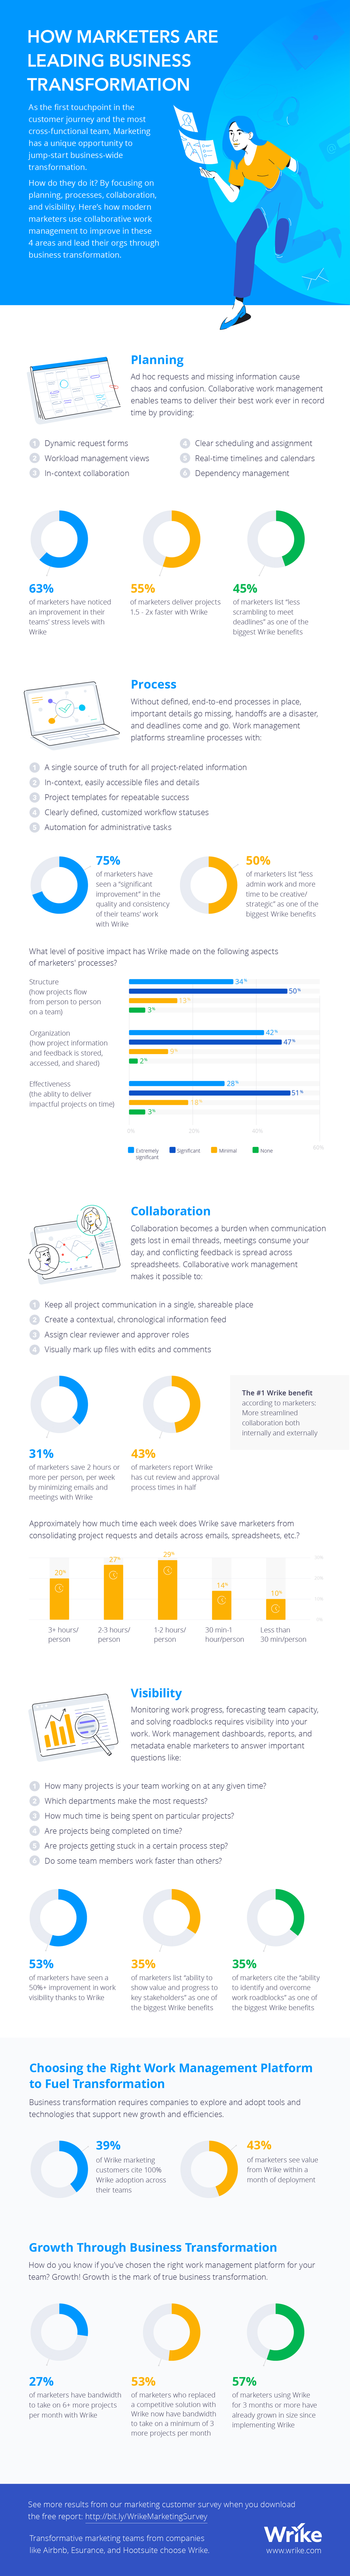 Marketing_Impact_Report_Infographic-02